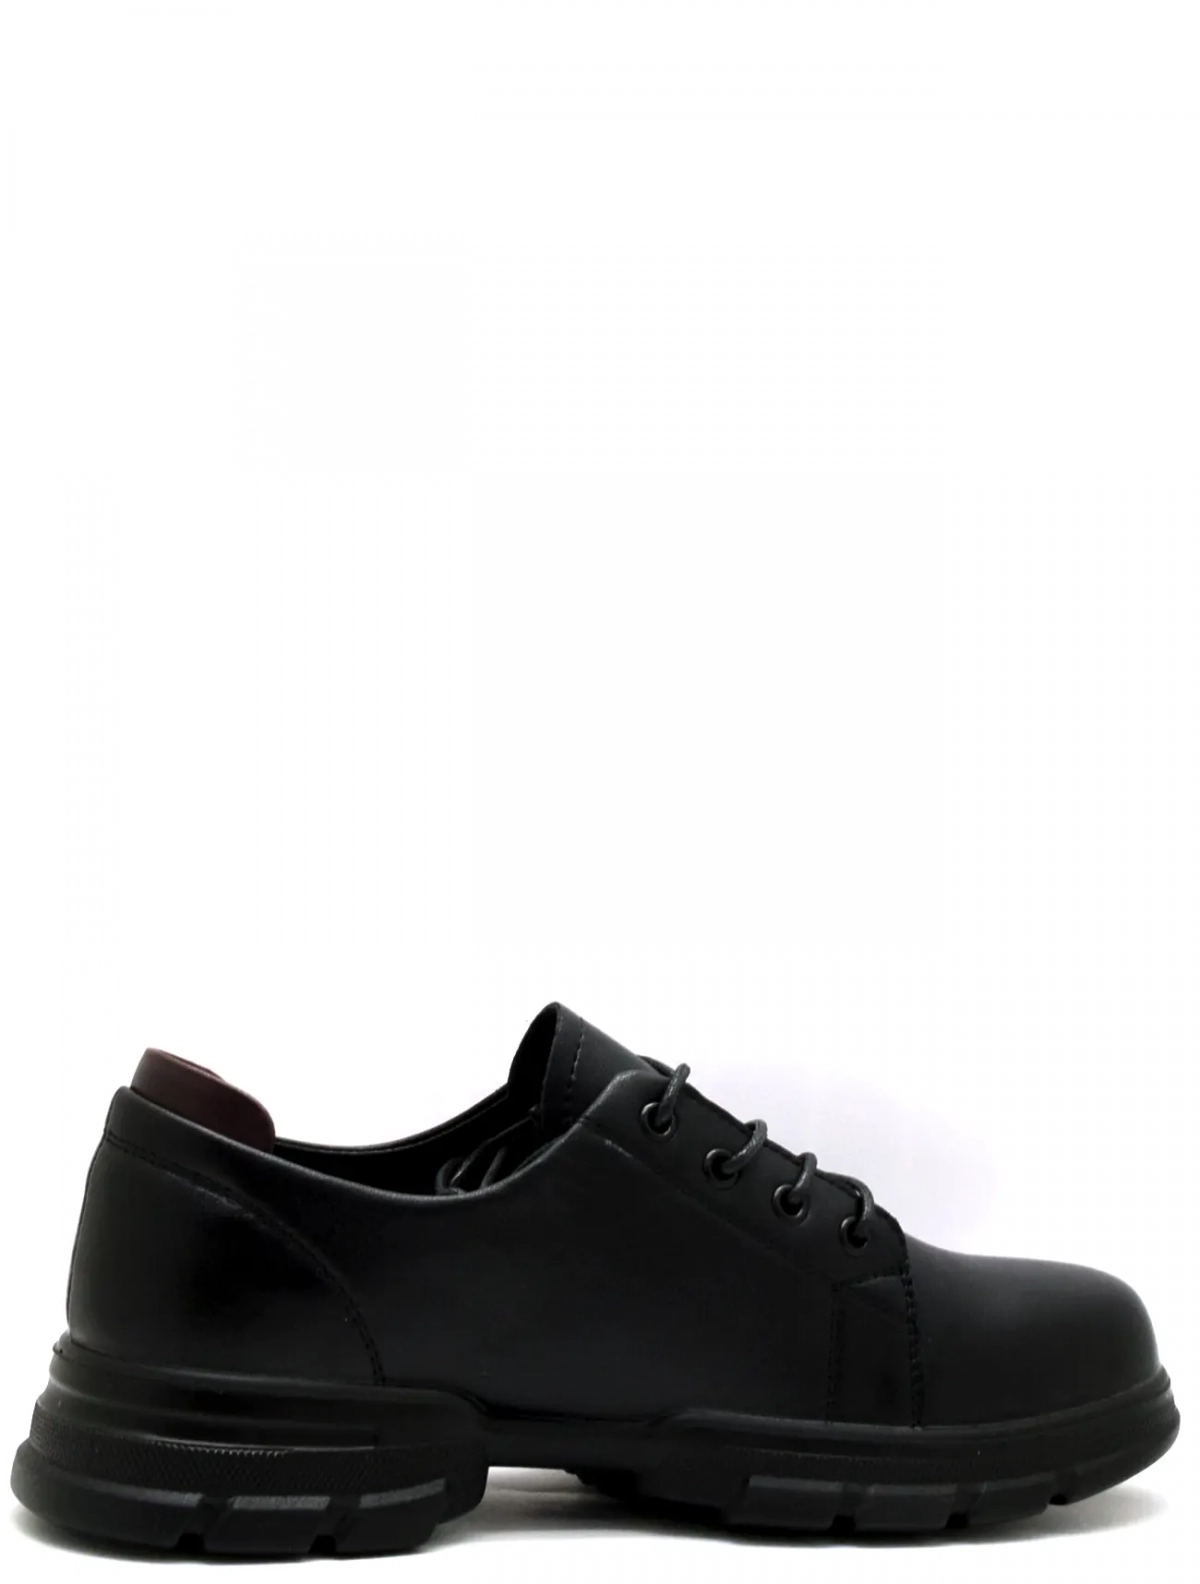 Baden CJ010-070 женские туфли